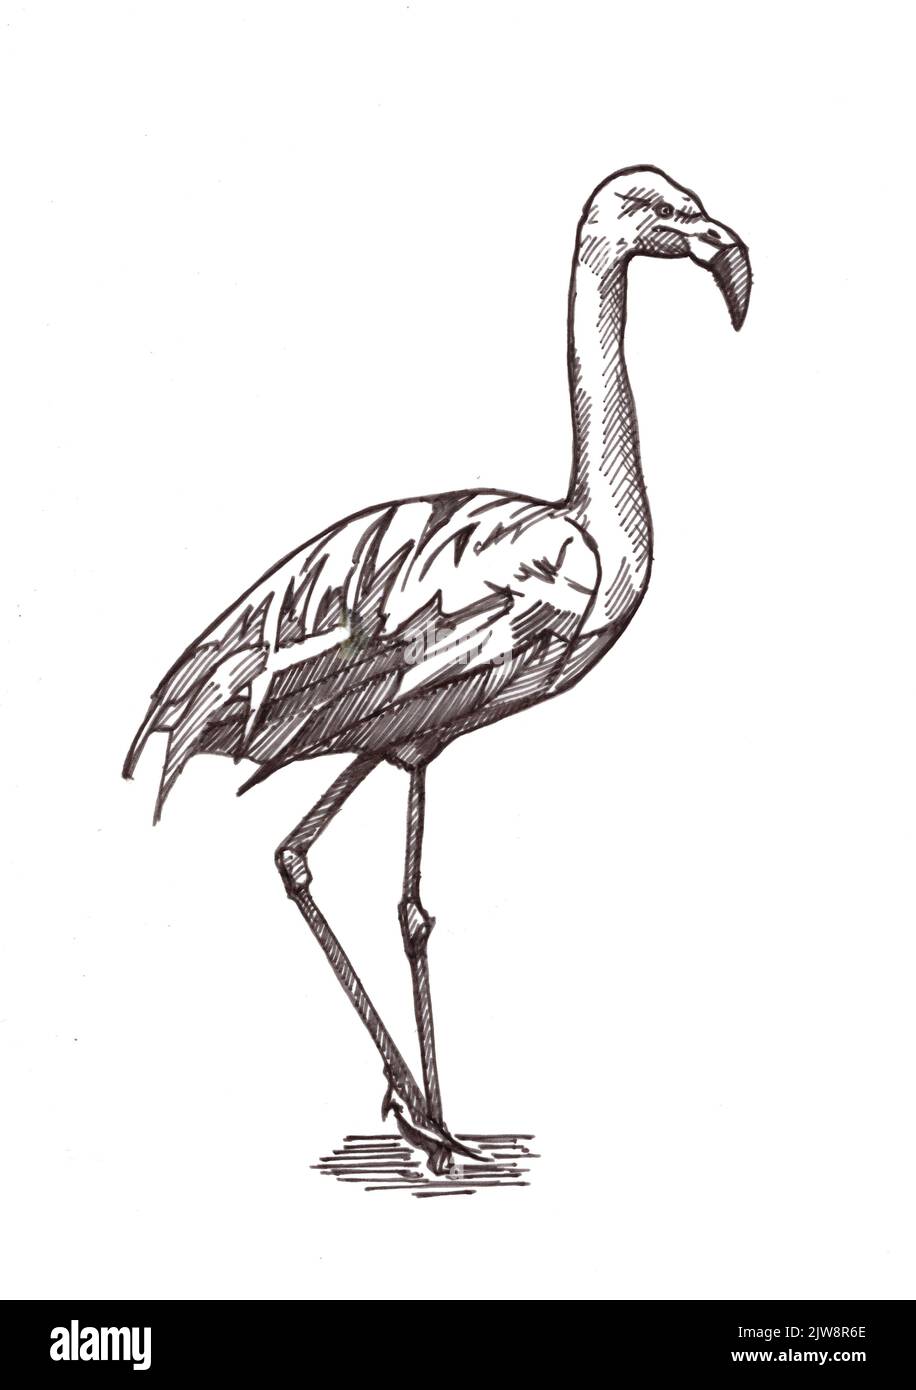 Black and white illustration of a flamingo on a white background. Stock Photo